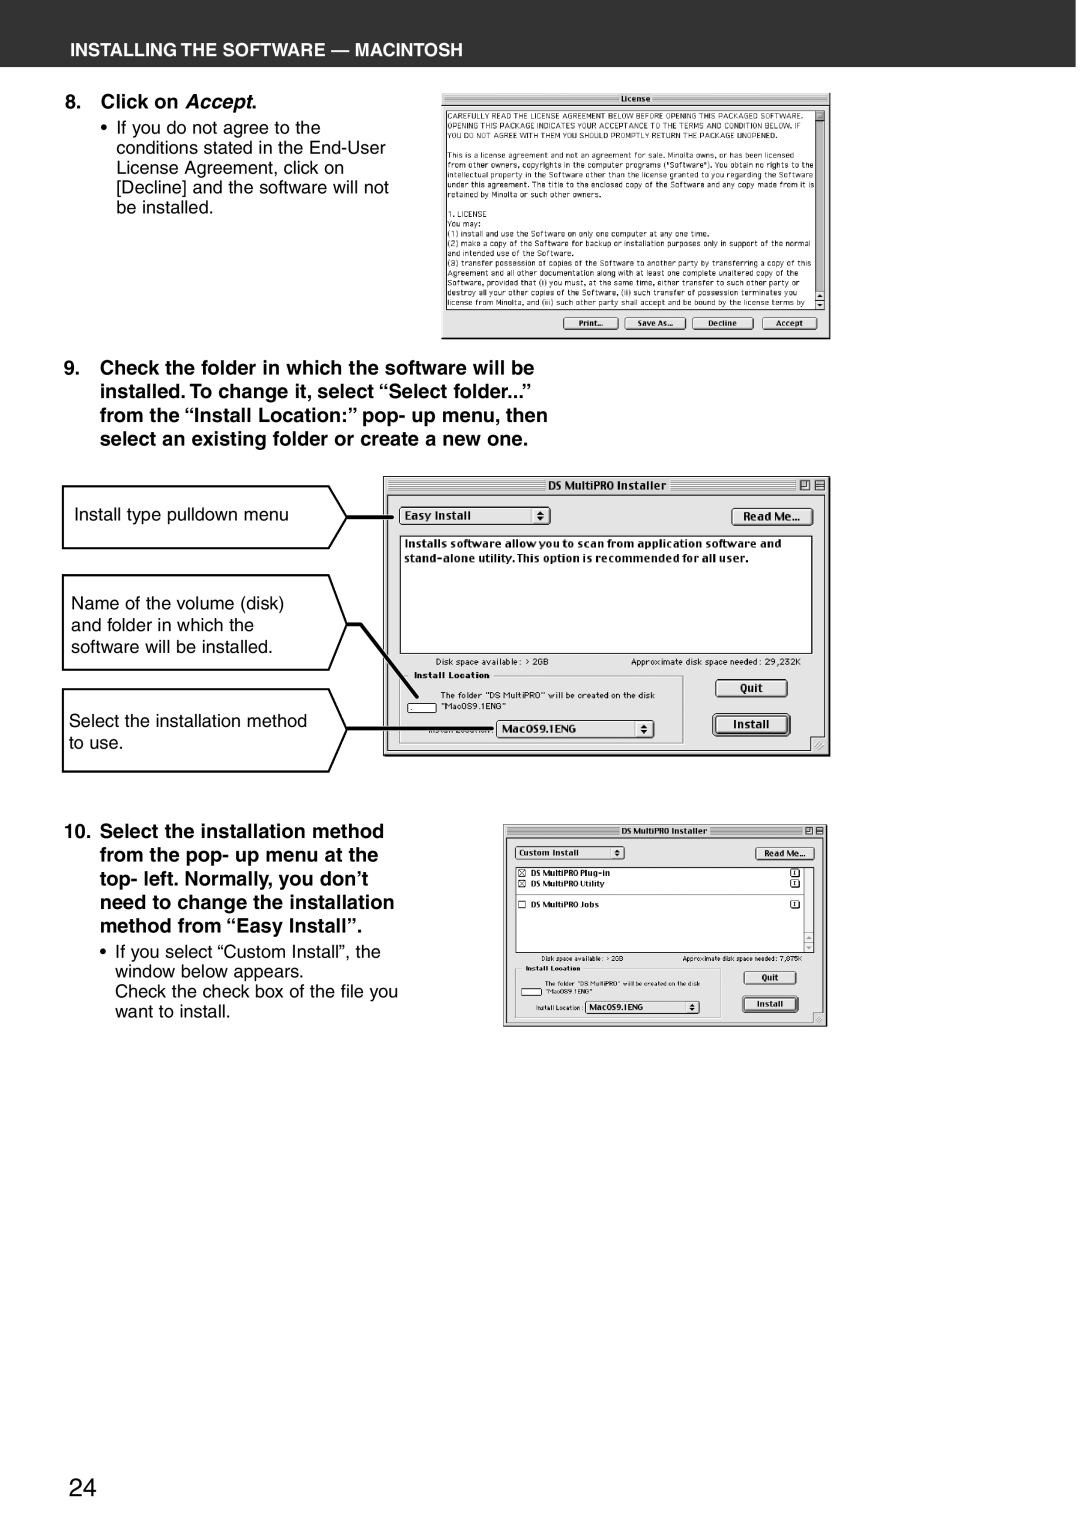 Konica Minolta Scan Multi PRO instruction manual Click on Accept 